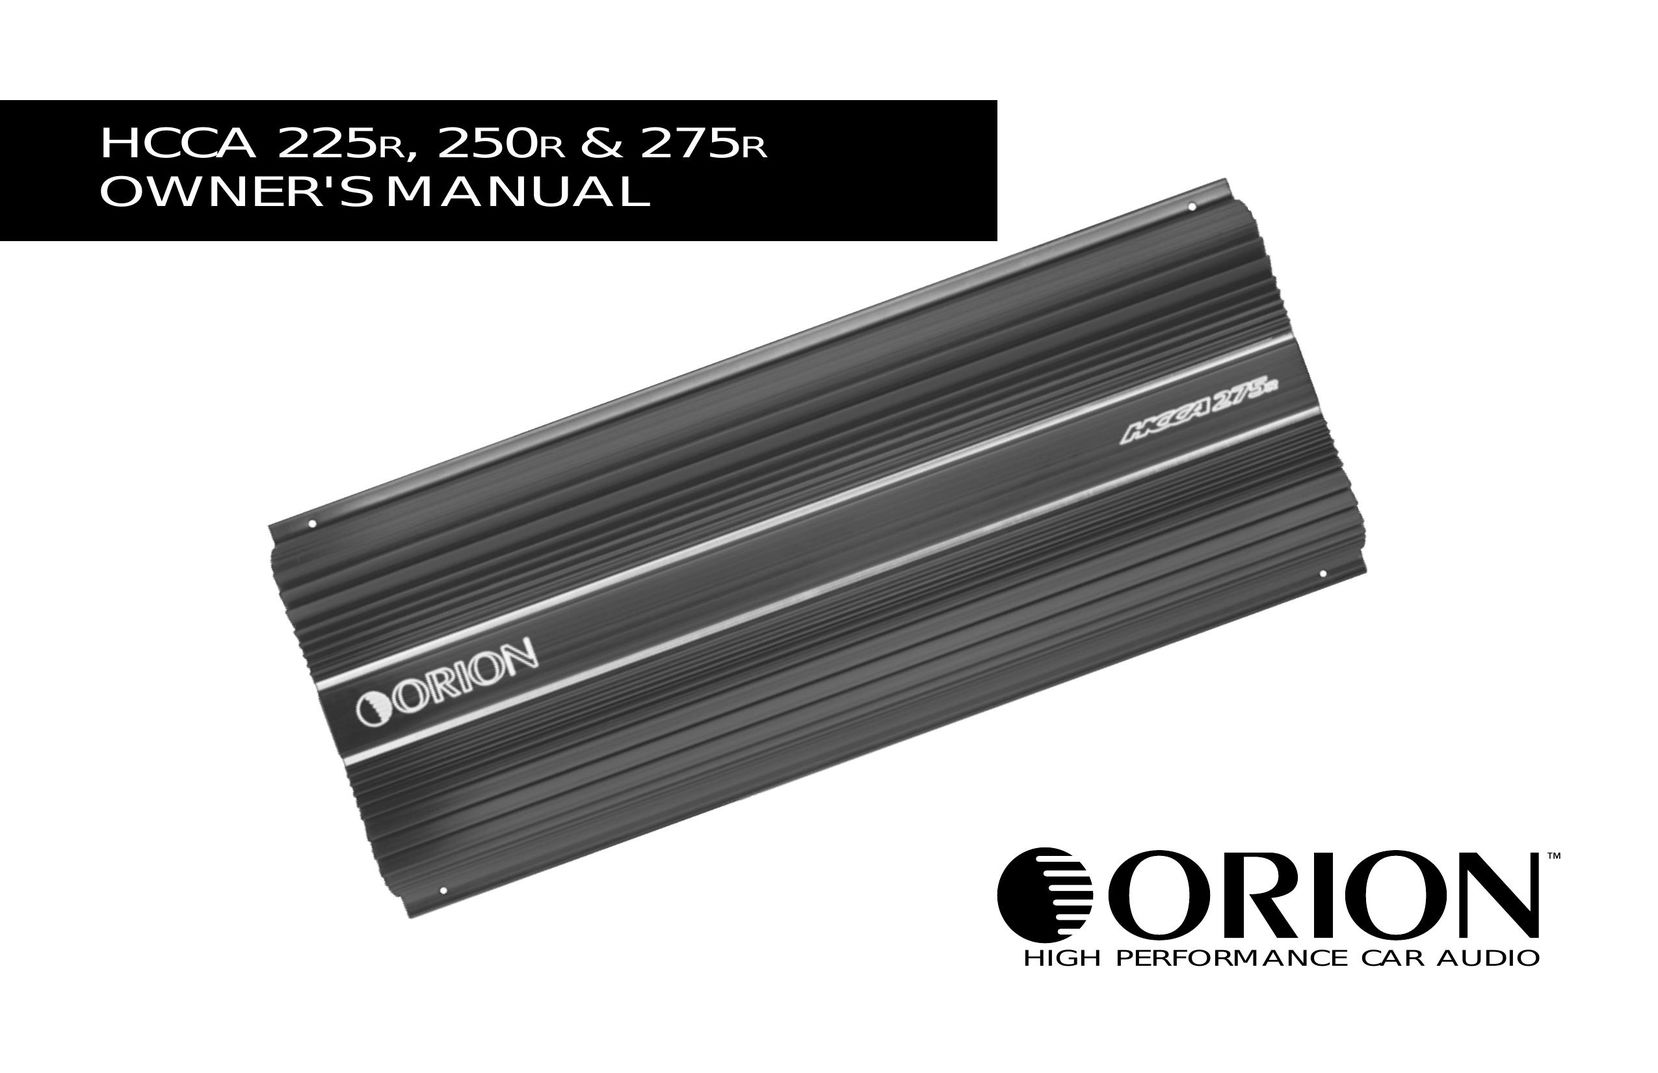 Orion Car Audio HCCA 225R, HCCA 250R, HCCA 275R Car Amplifier User Manual